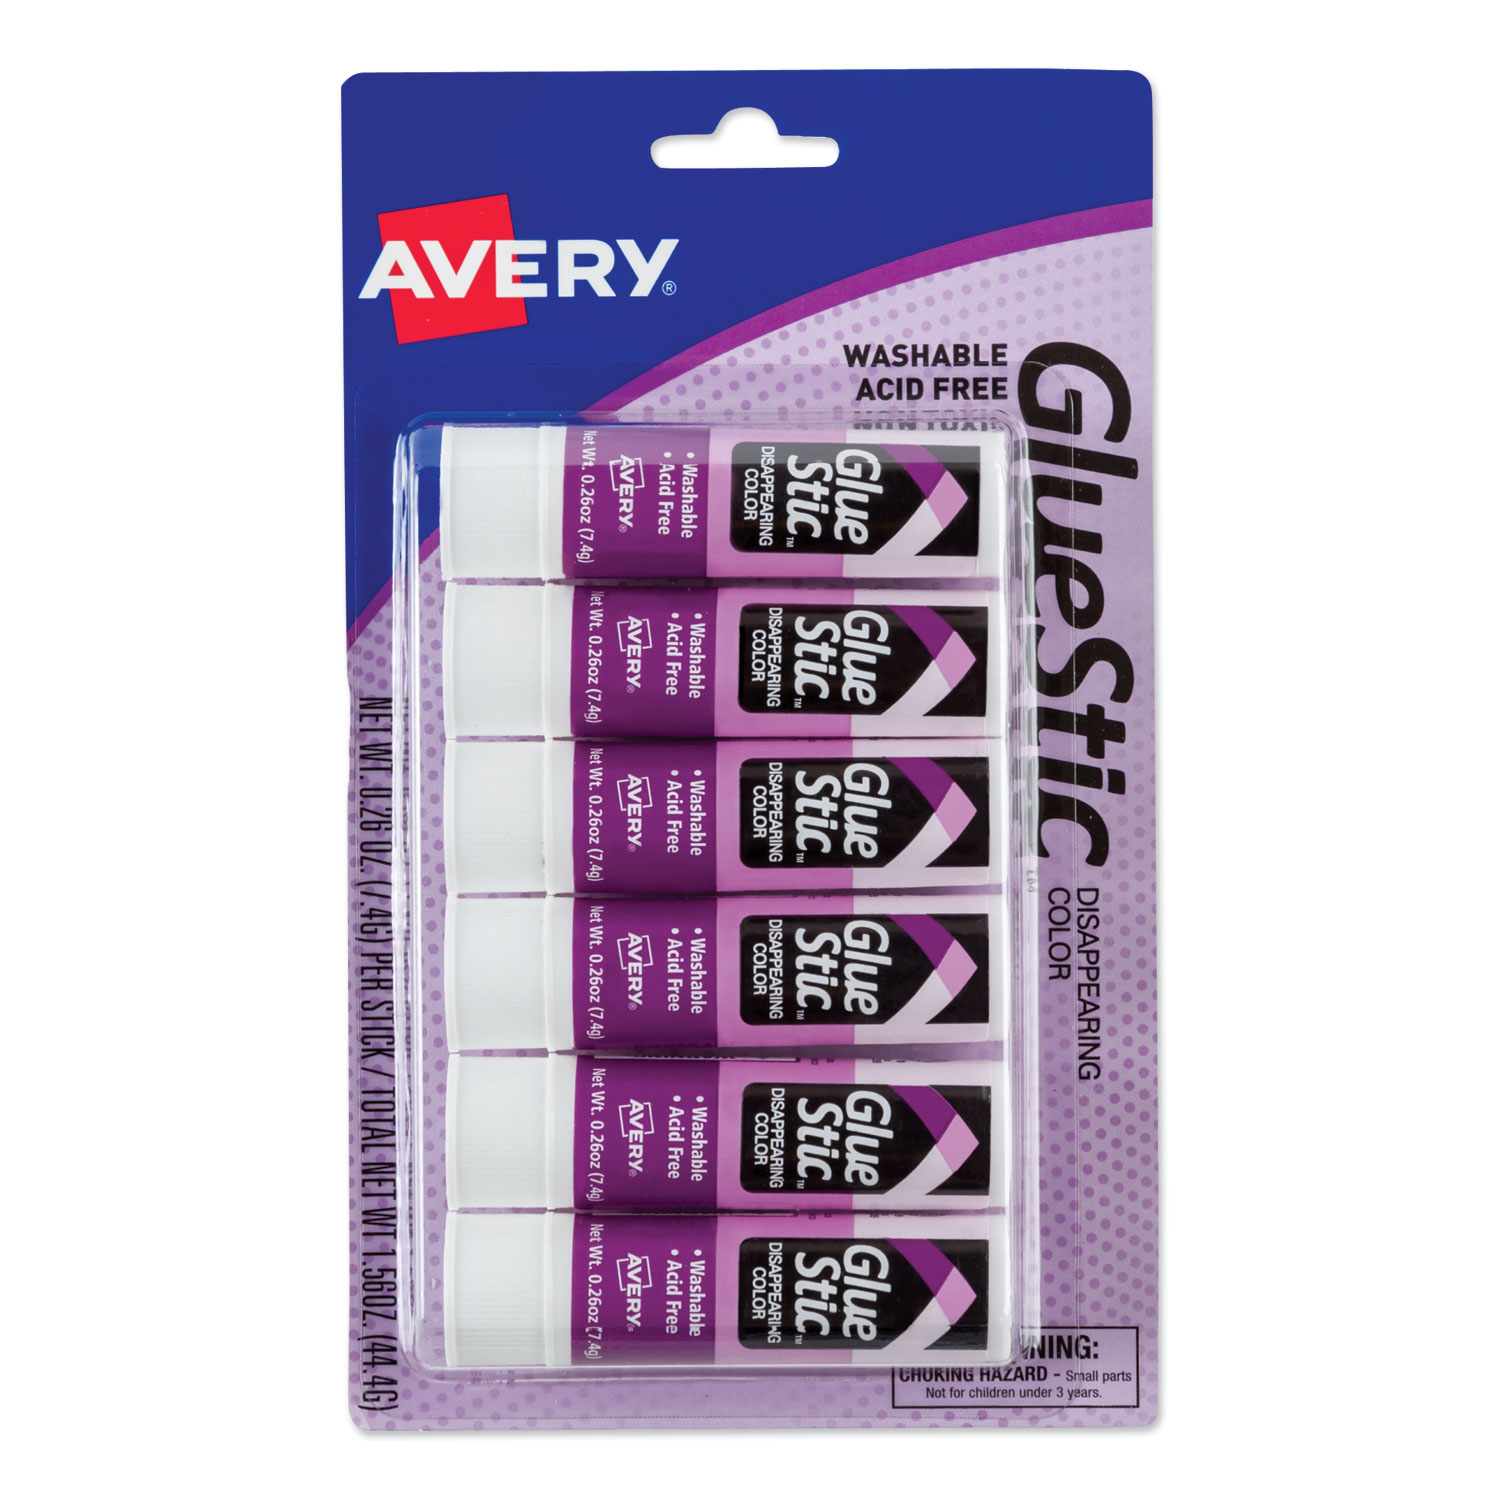 Avery Glue Stick - AVE98073 